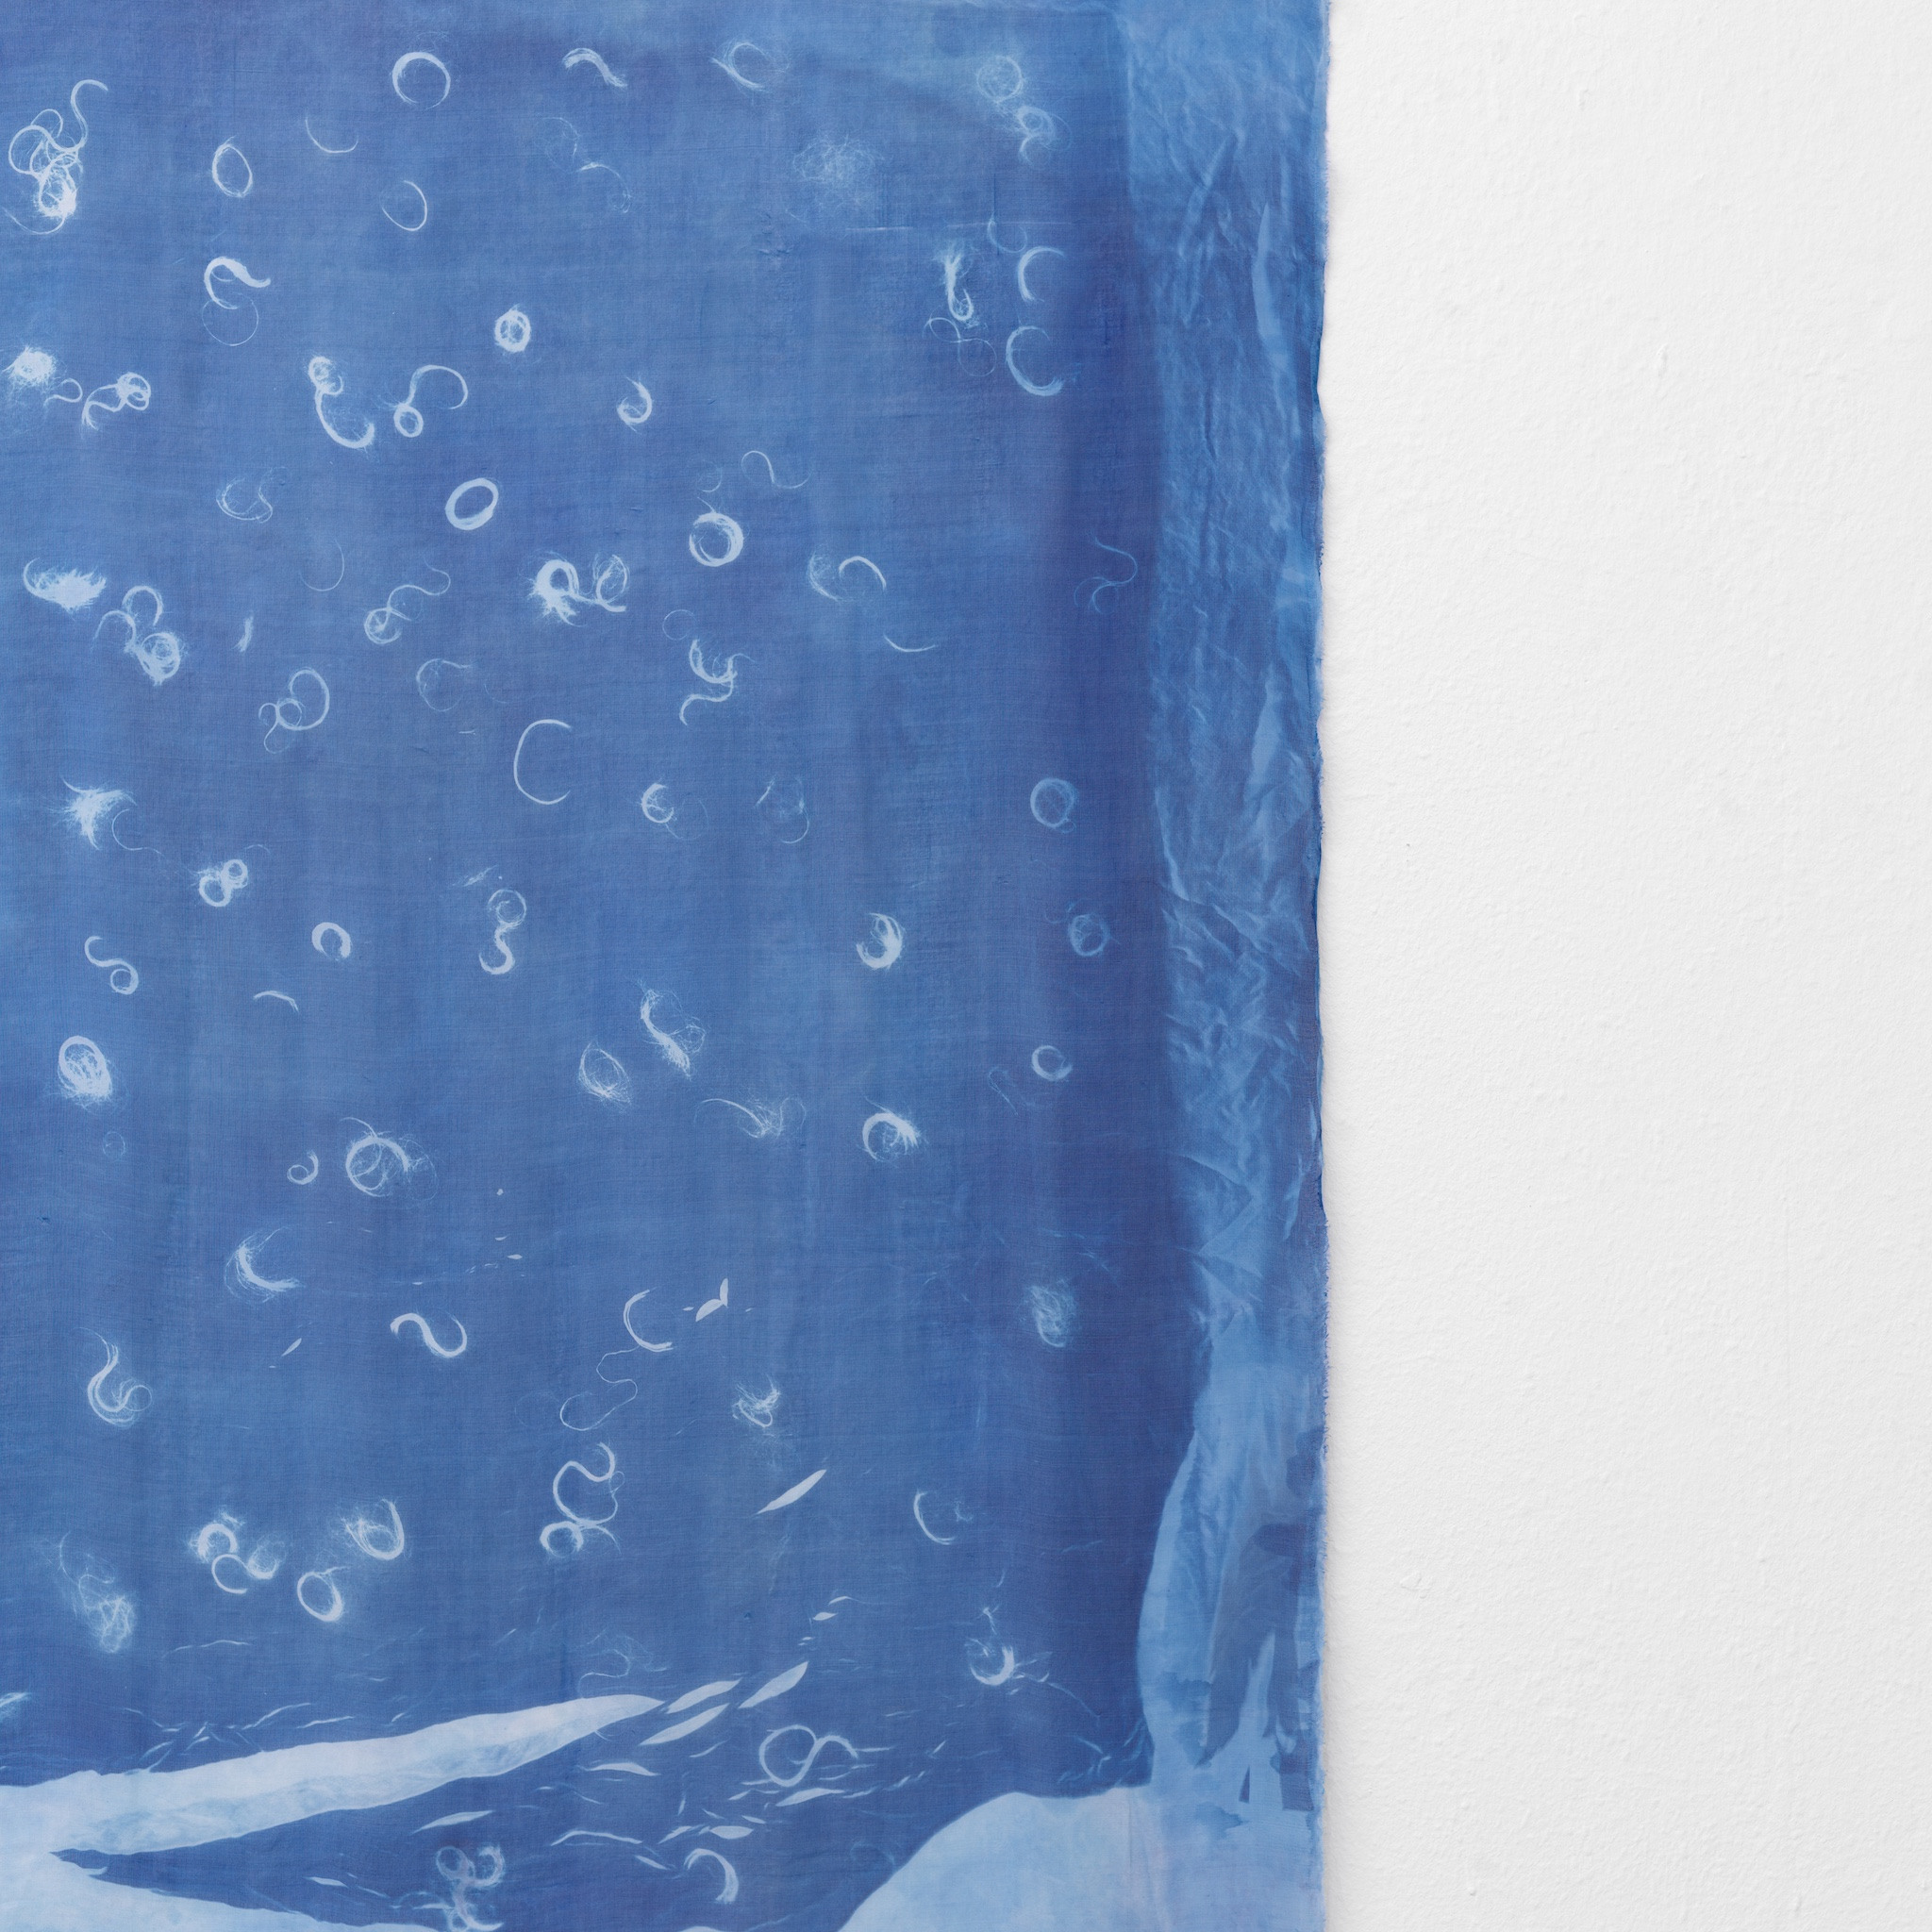 Dyveke Bredsdorff, â€œShoreâ€�, 2023. Cyanotype on chiffon silk, 20 hours overnight exposure, 122.0 x 141.5 cm